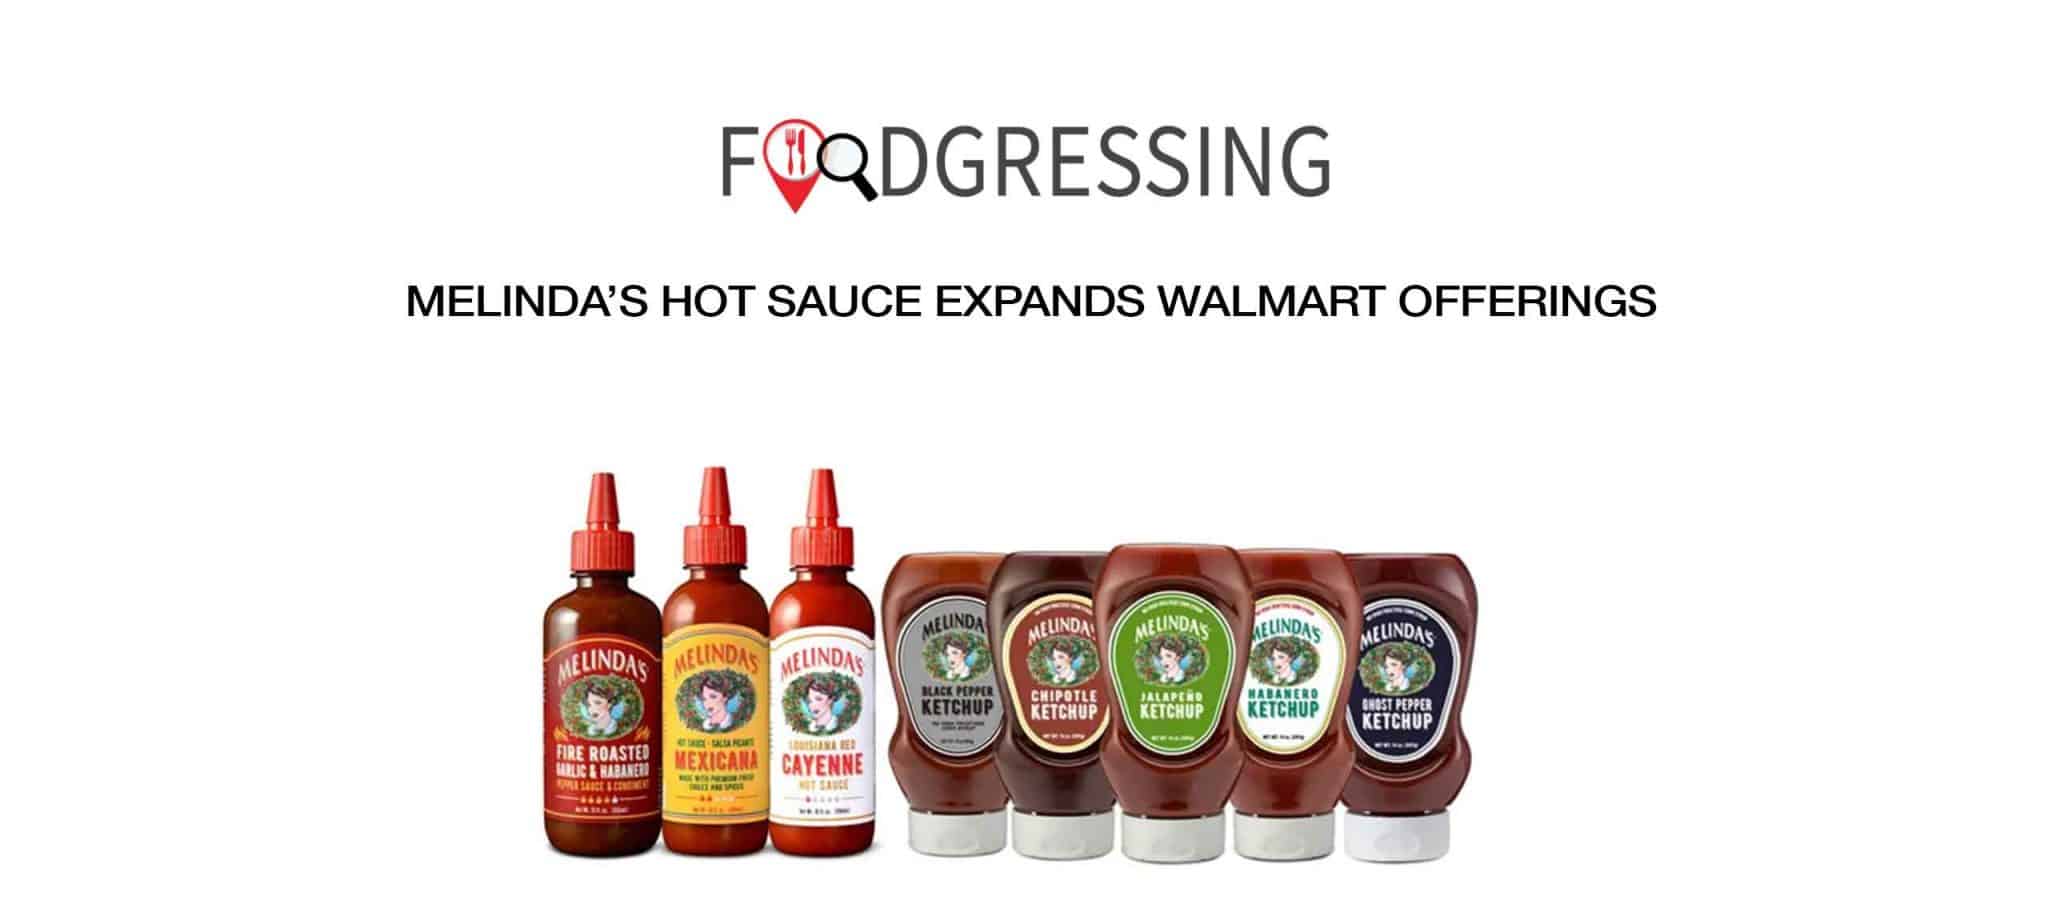 Melinda’s Hot Sauce Expands Walmart Offerings | Says Foodgressing.com